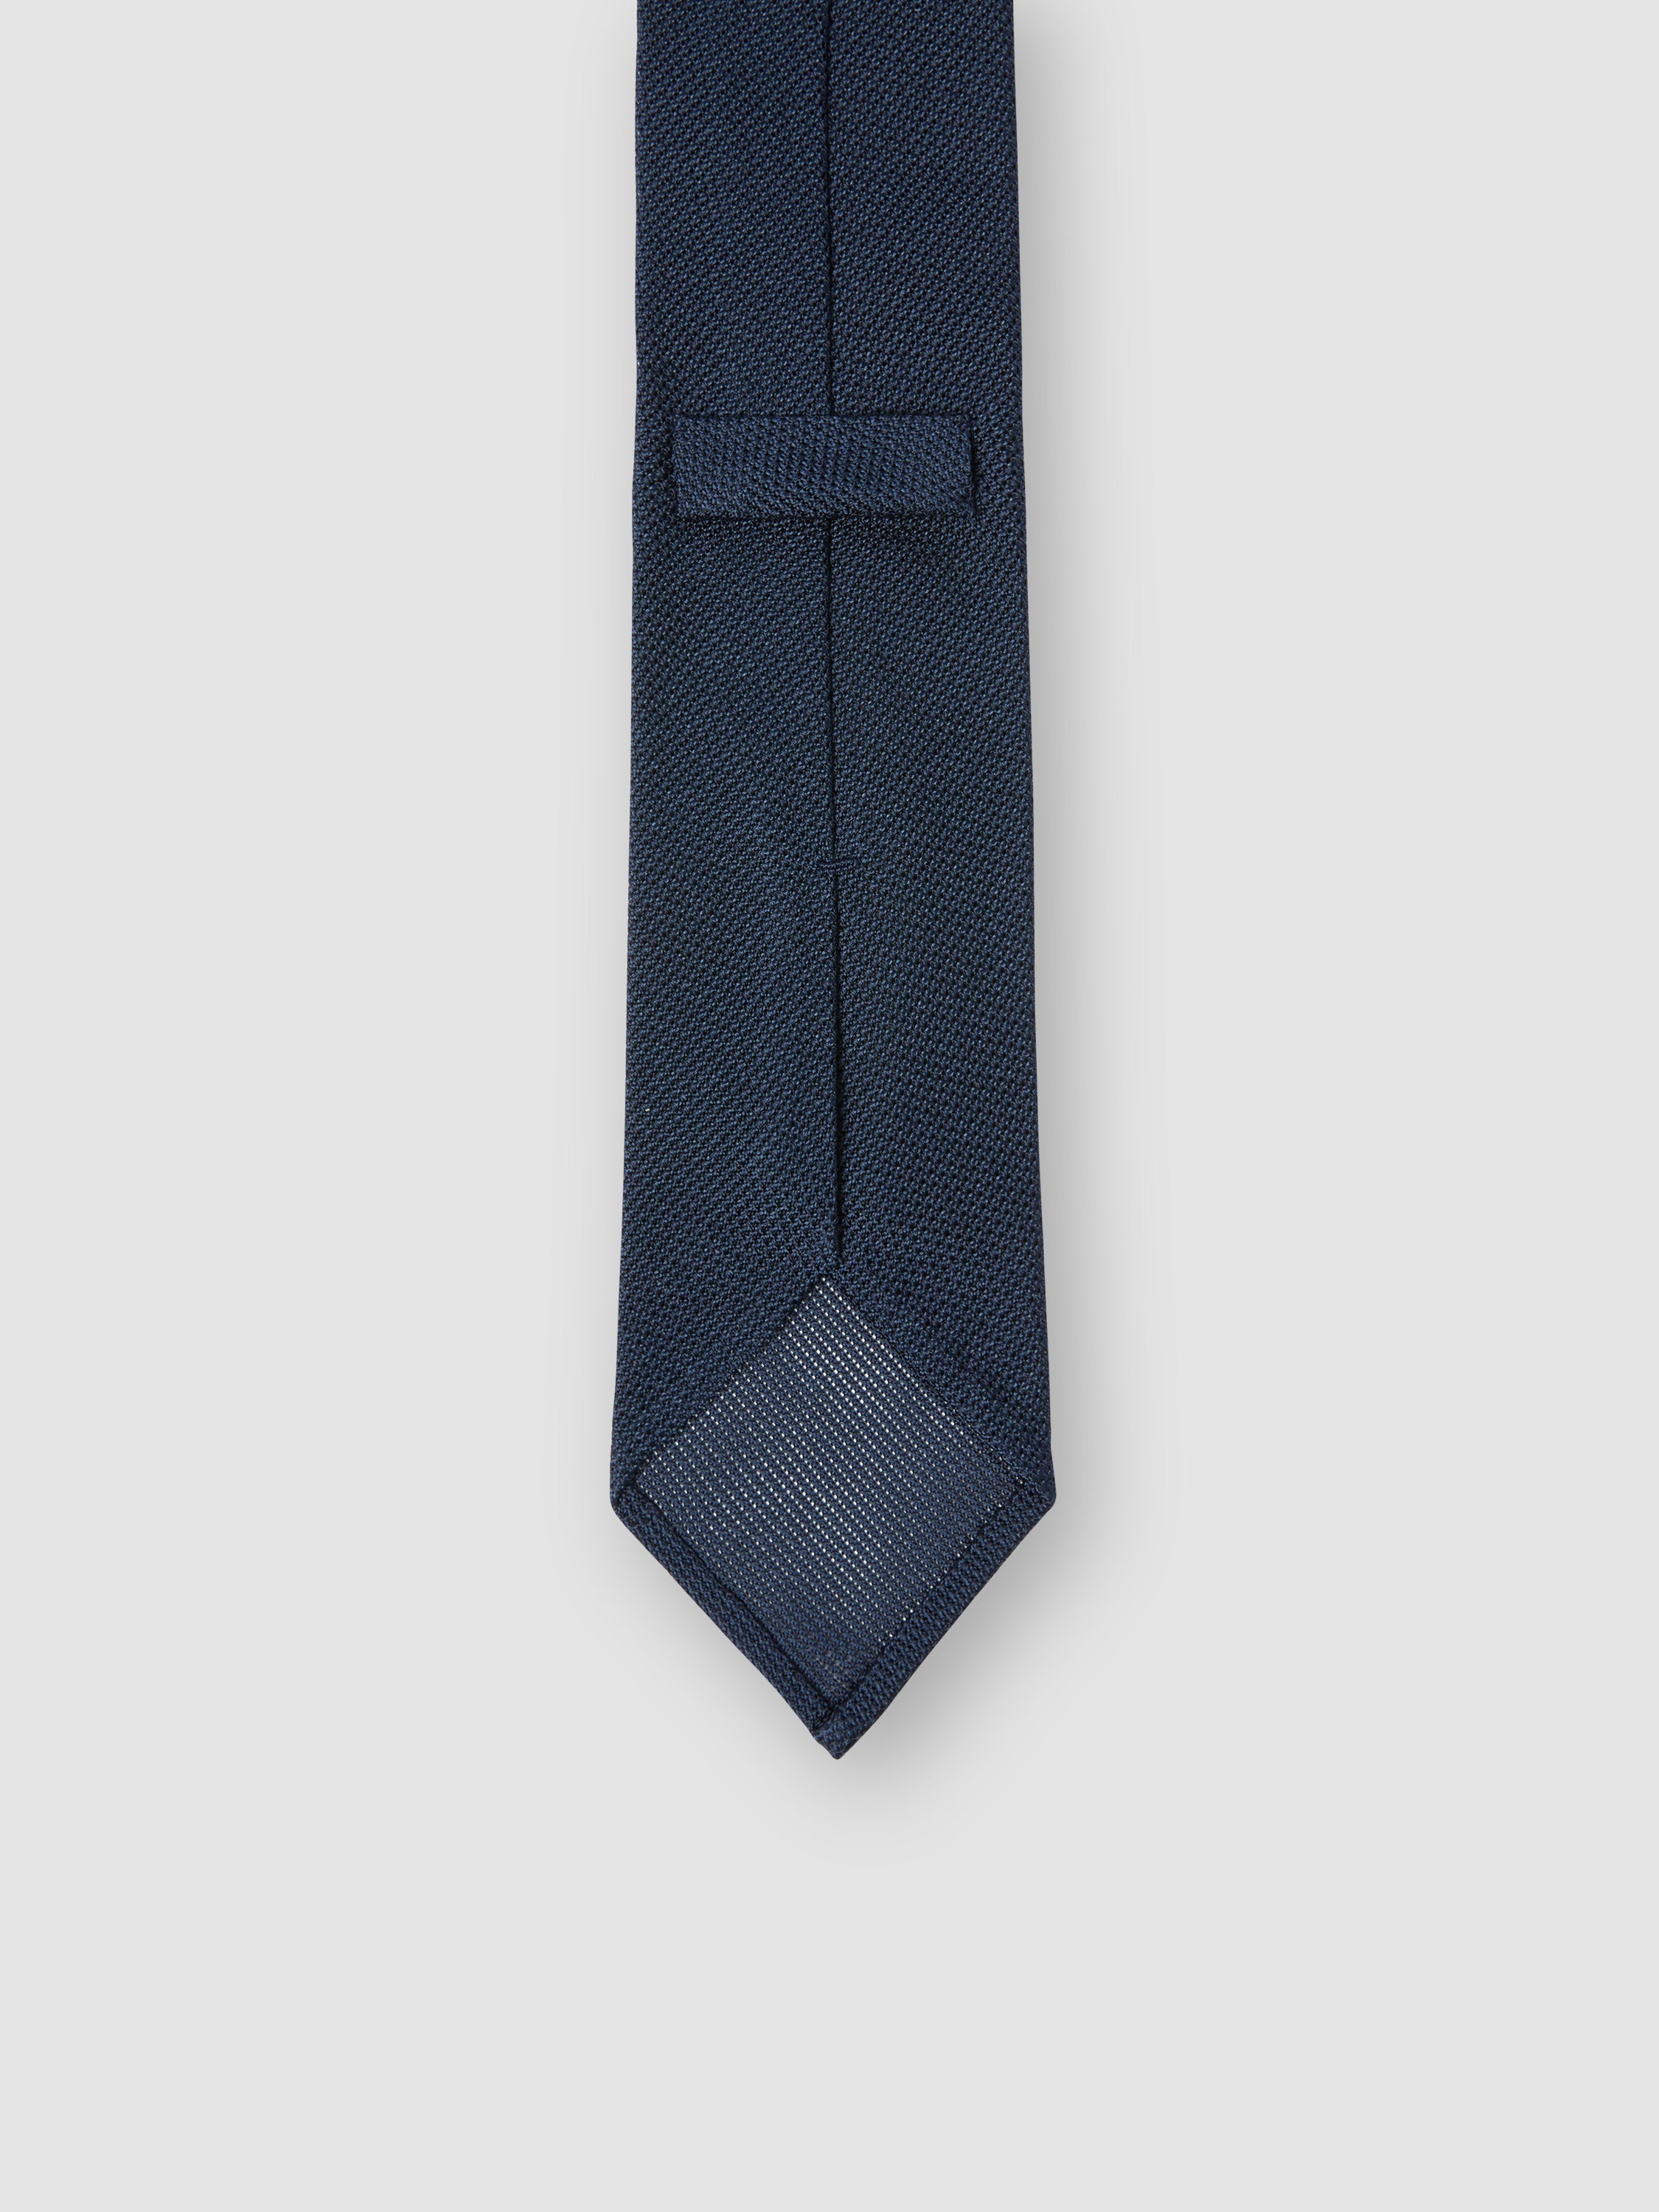 Silk Grenadine Tie Navy Detail Product Image